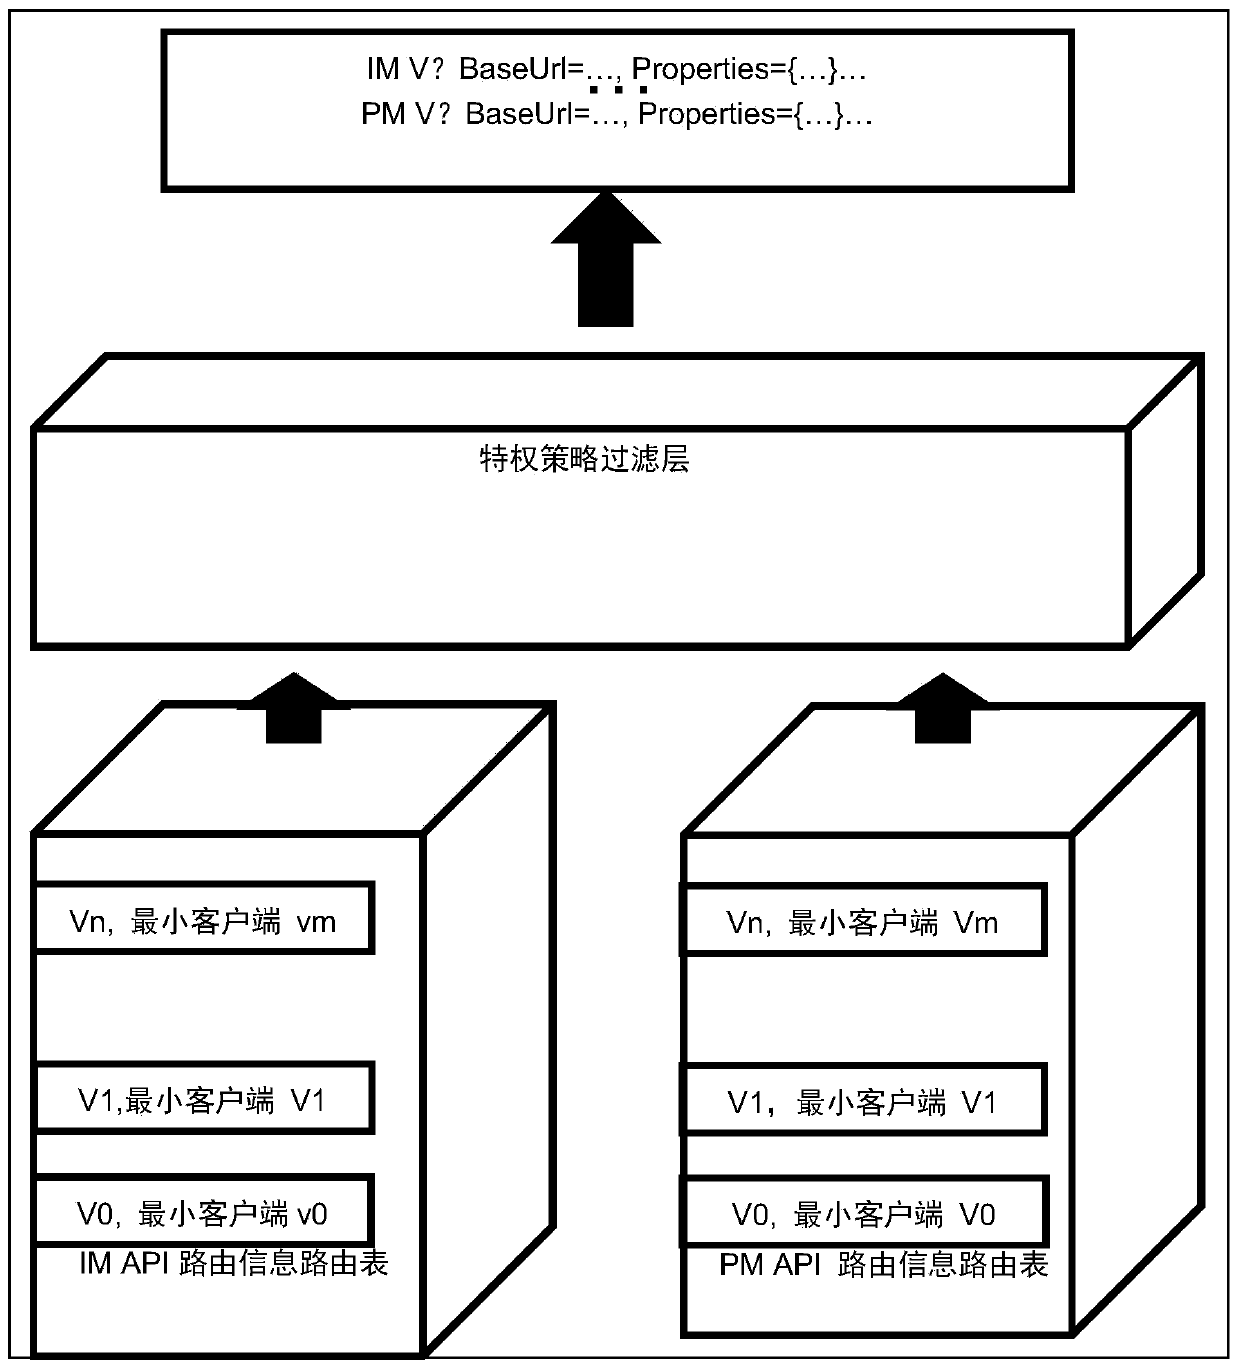 Method for updating API (Application Program Interface) of gray deployment application system of server